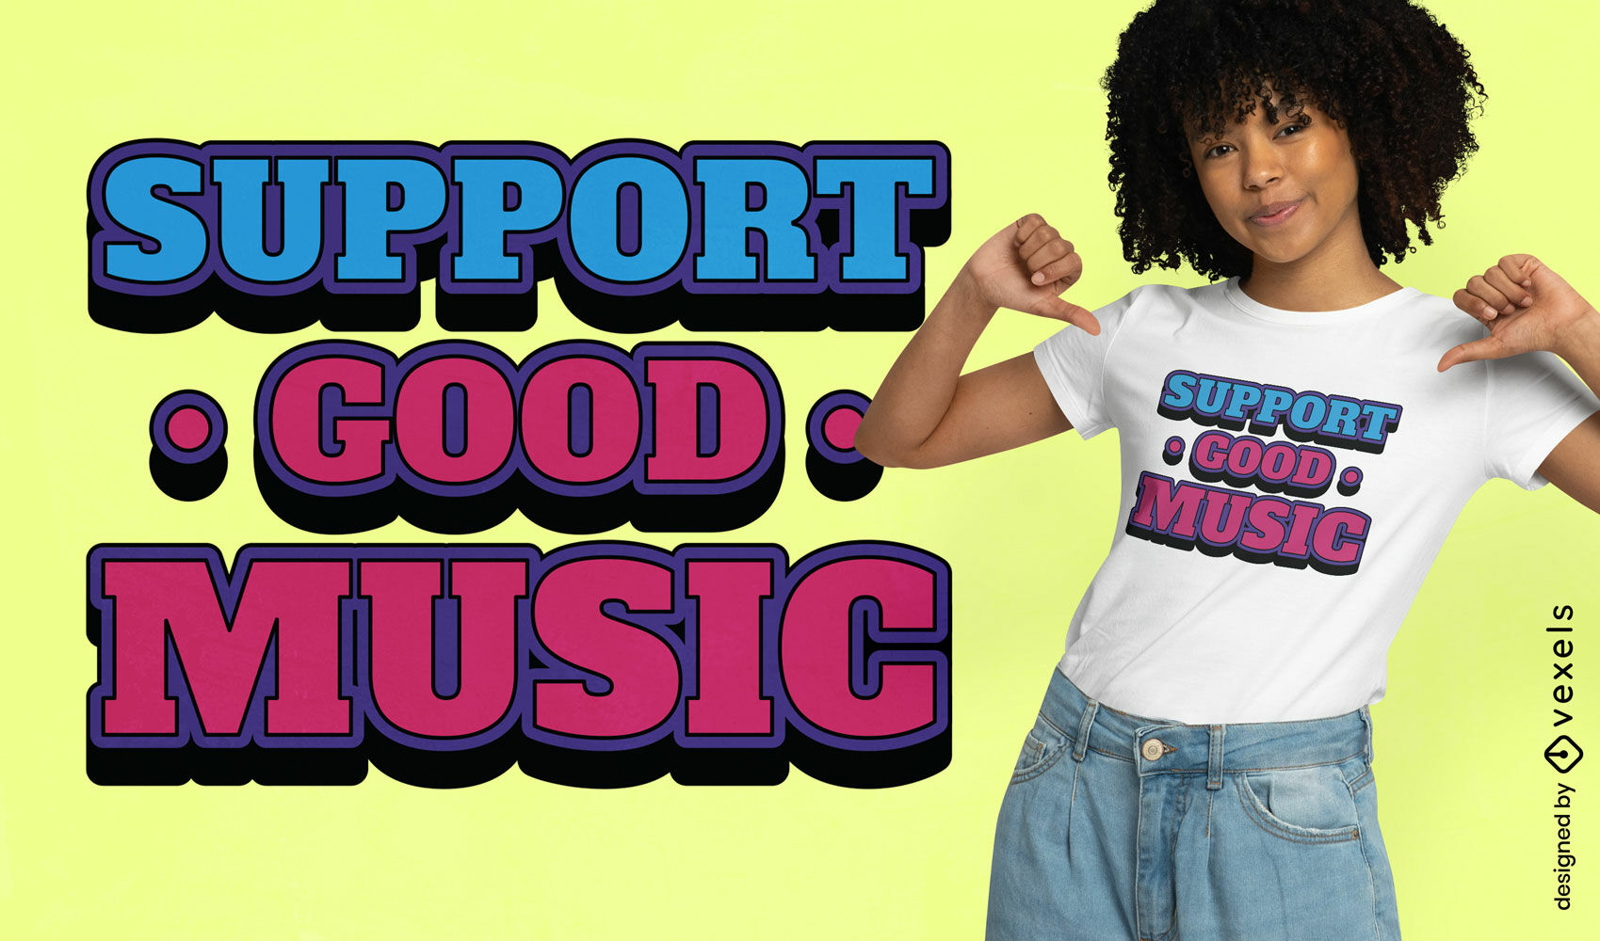 Apoie o design de camisetas de boa música